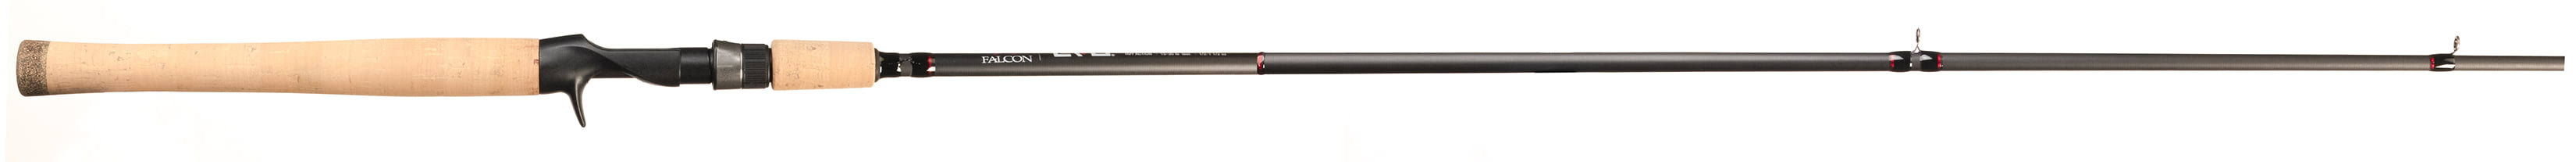 Falcon Rods Evo 7'3 inch Heavy Action Casting Fishing Rod, Black